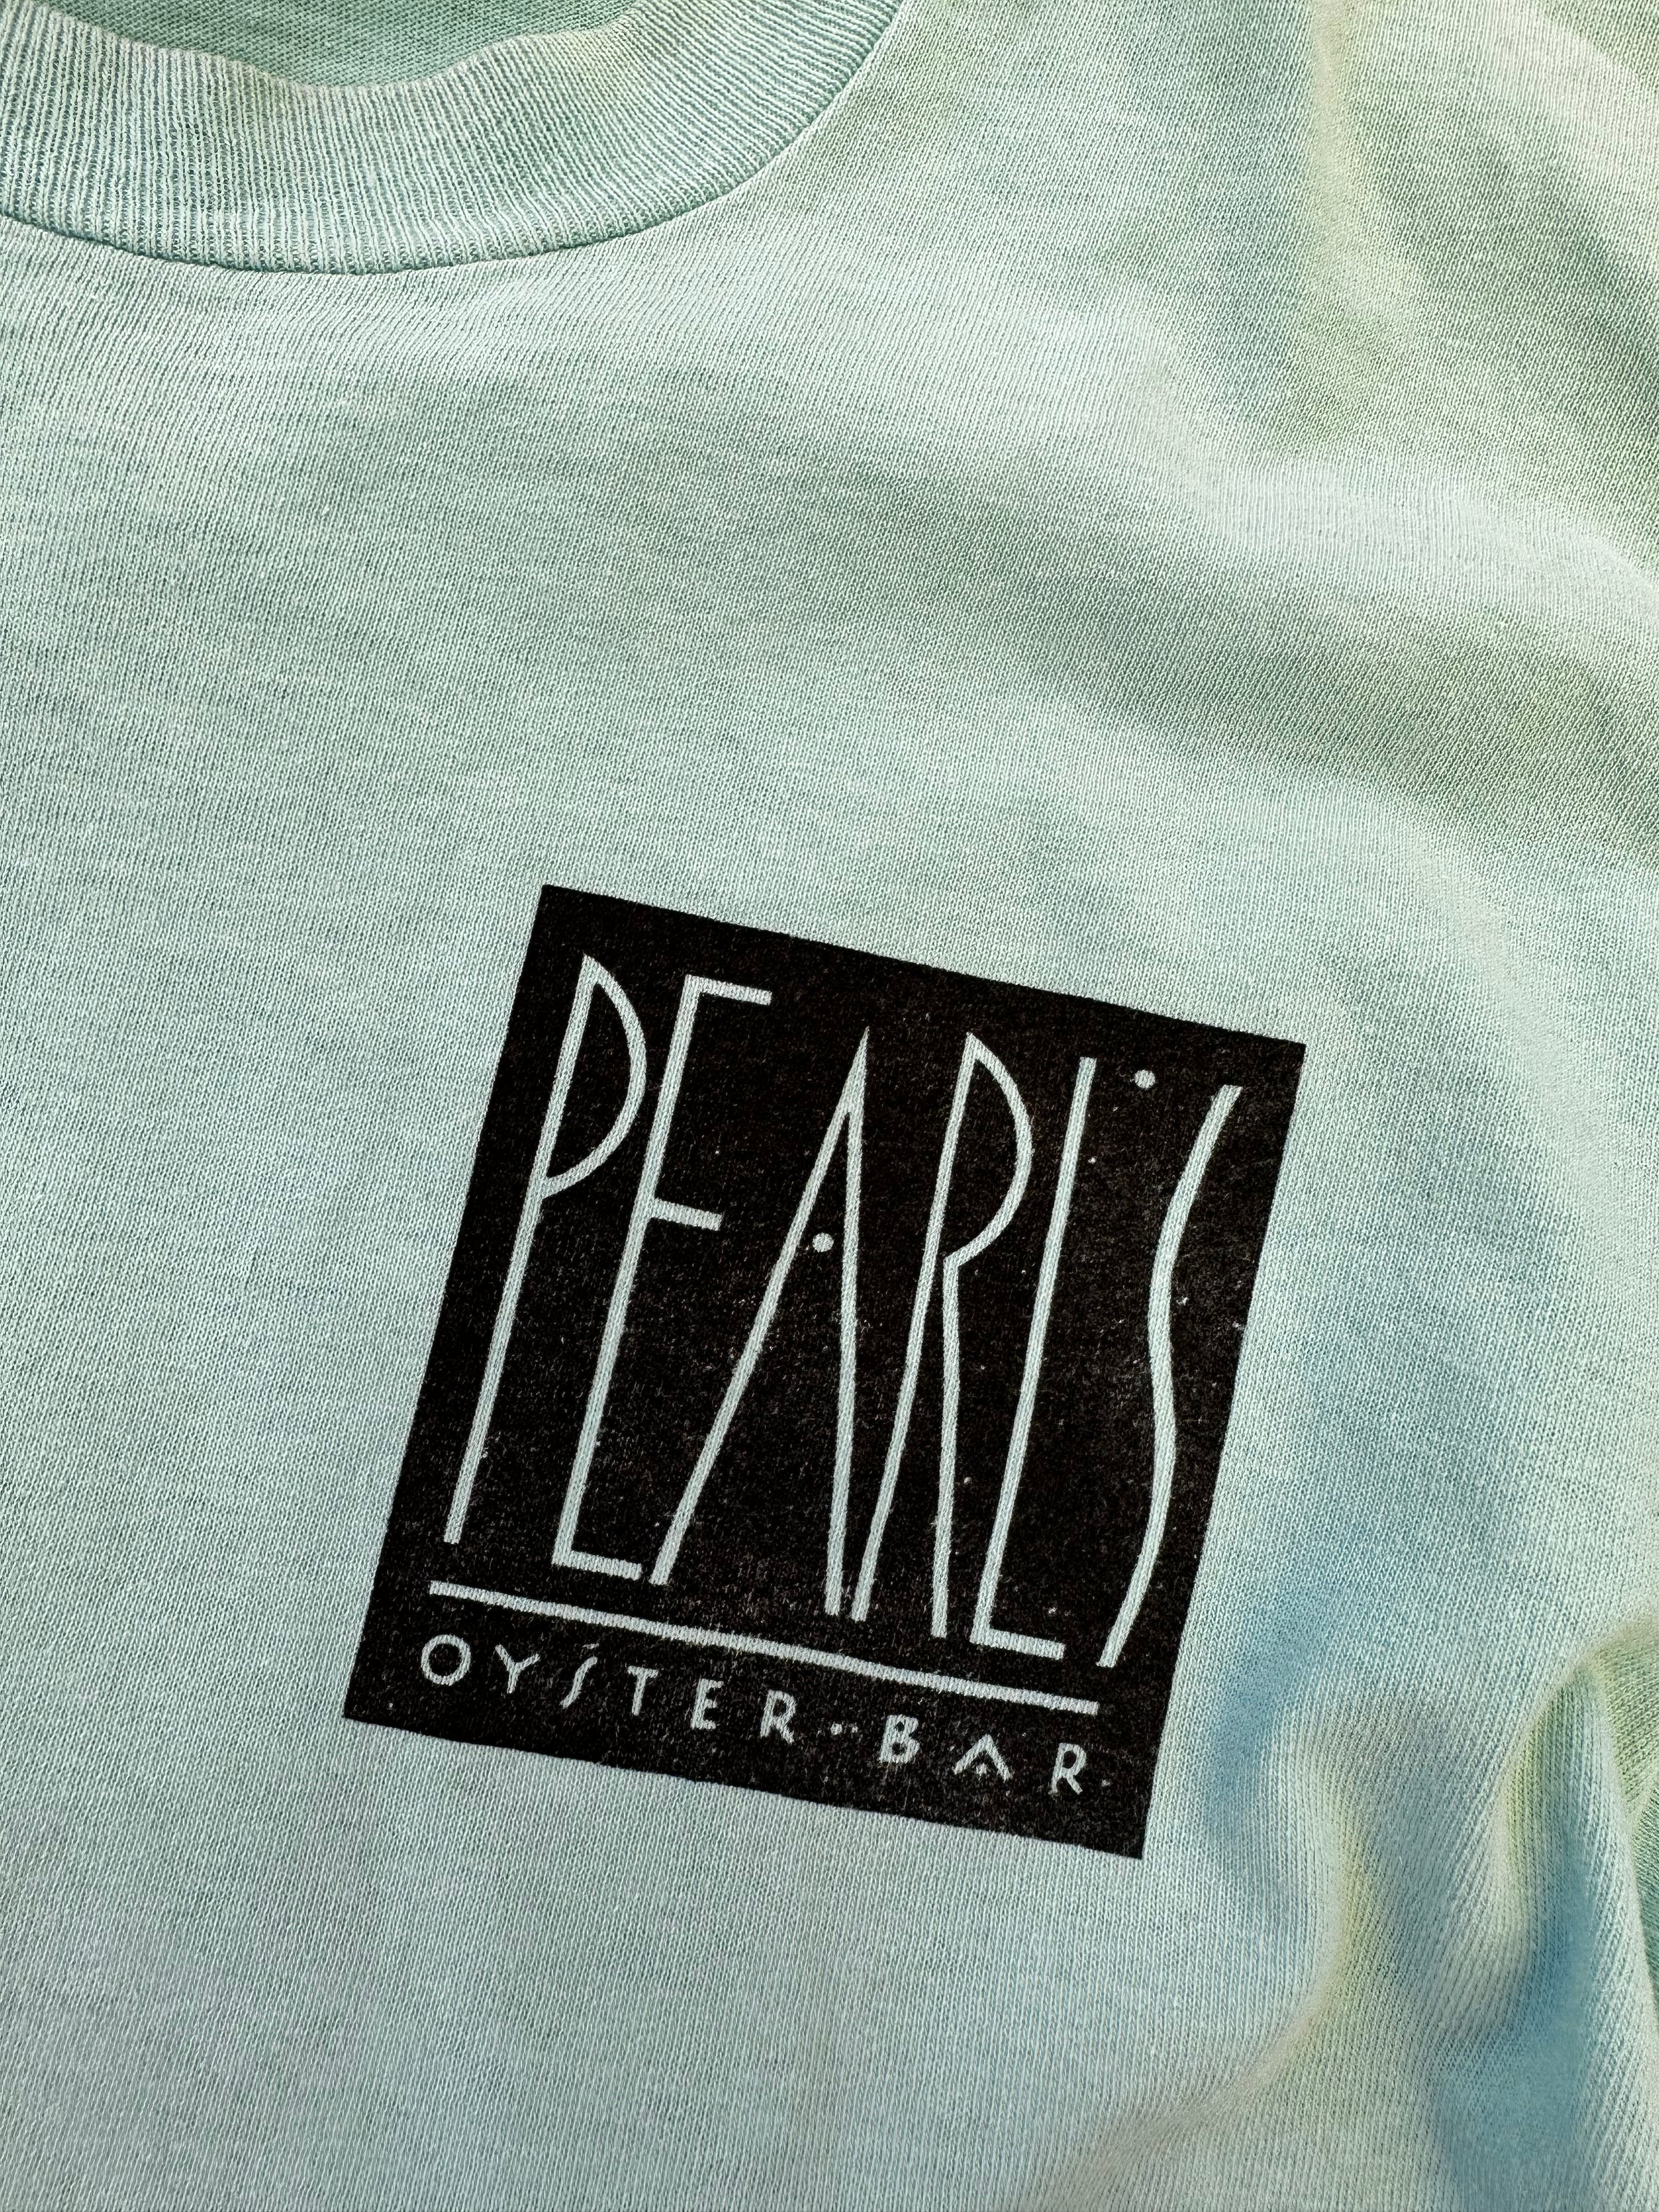 Vintage “Pearls Oyster Bar” tee